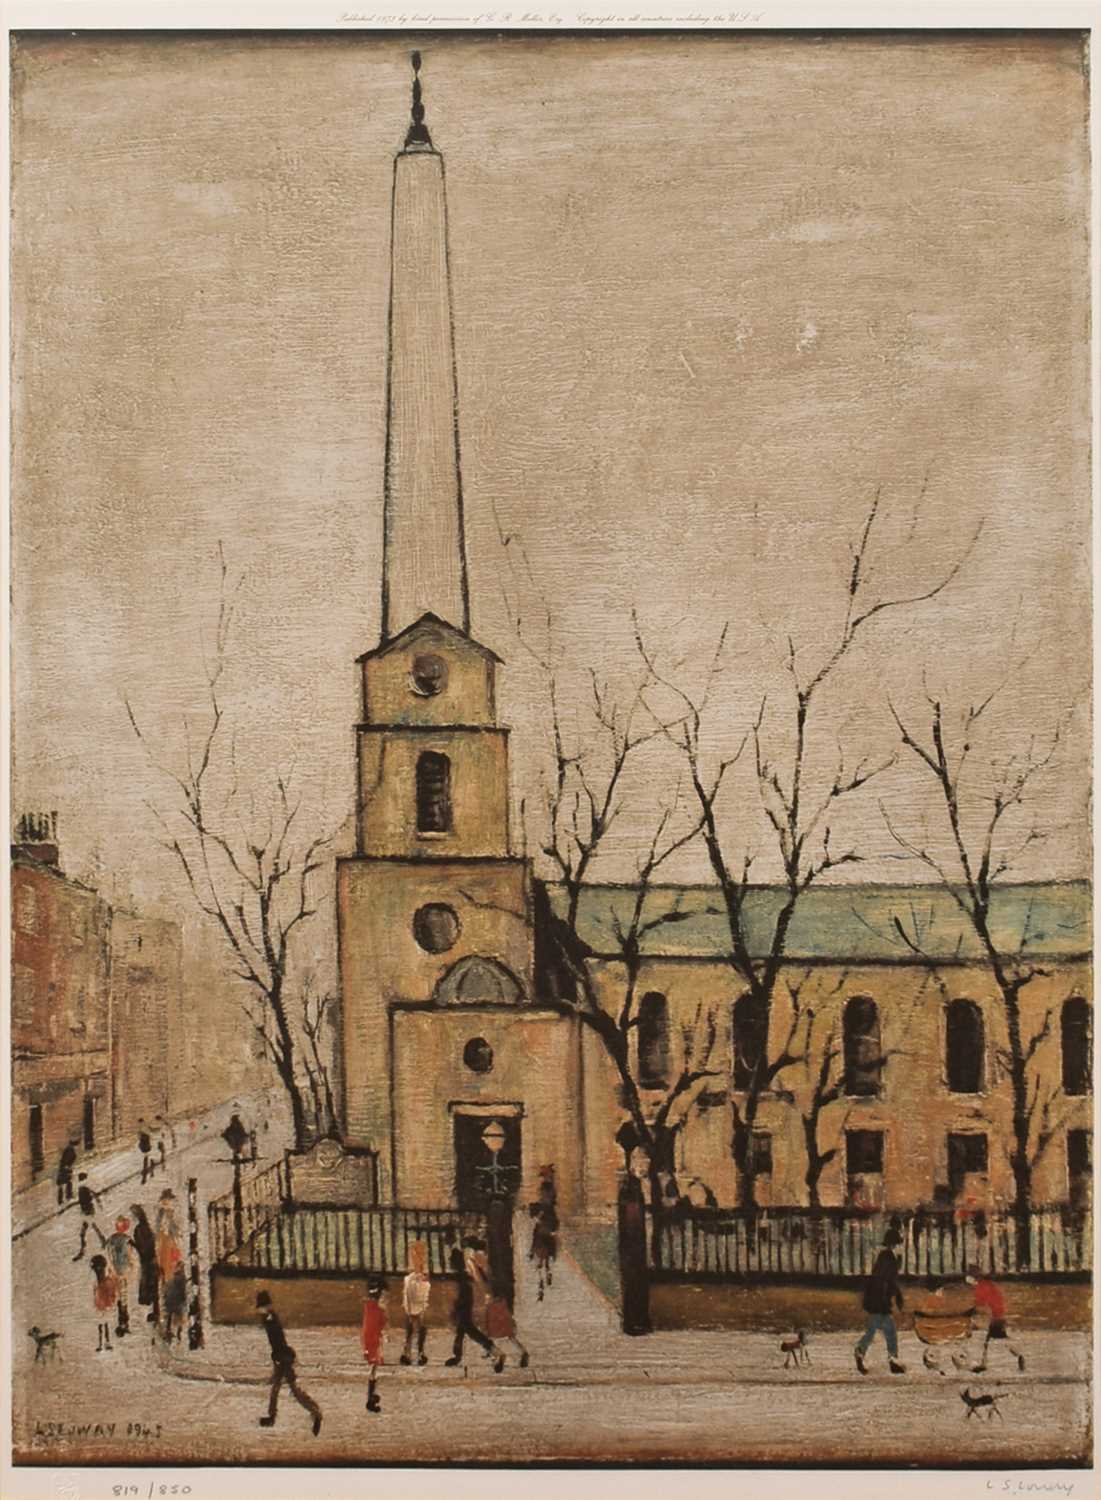 L.S. Lowry R.A. (British 1887-1976) "St. Luke's Church, Old Street, London, E.C."